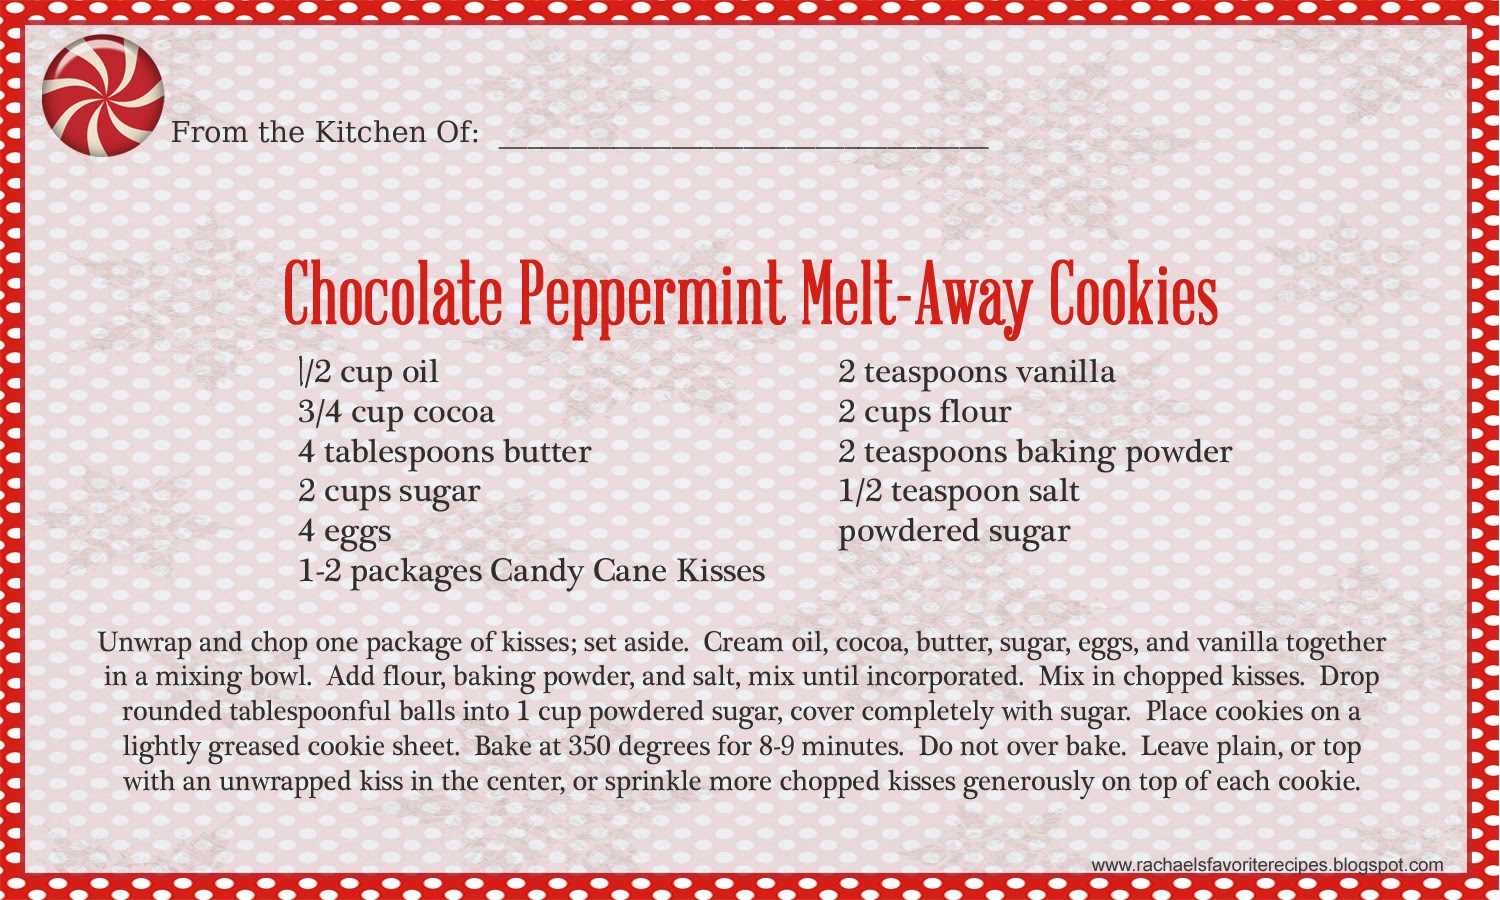 RACHAEL'S FAVORITE RECIPES: Chocolate Peppermint Melt-Away Cookies